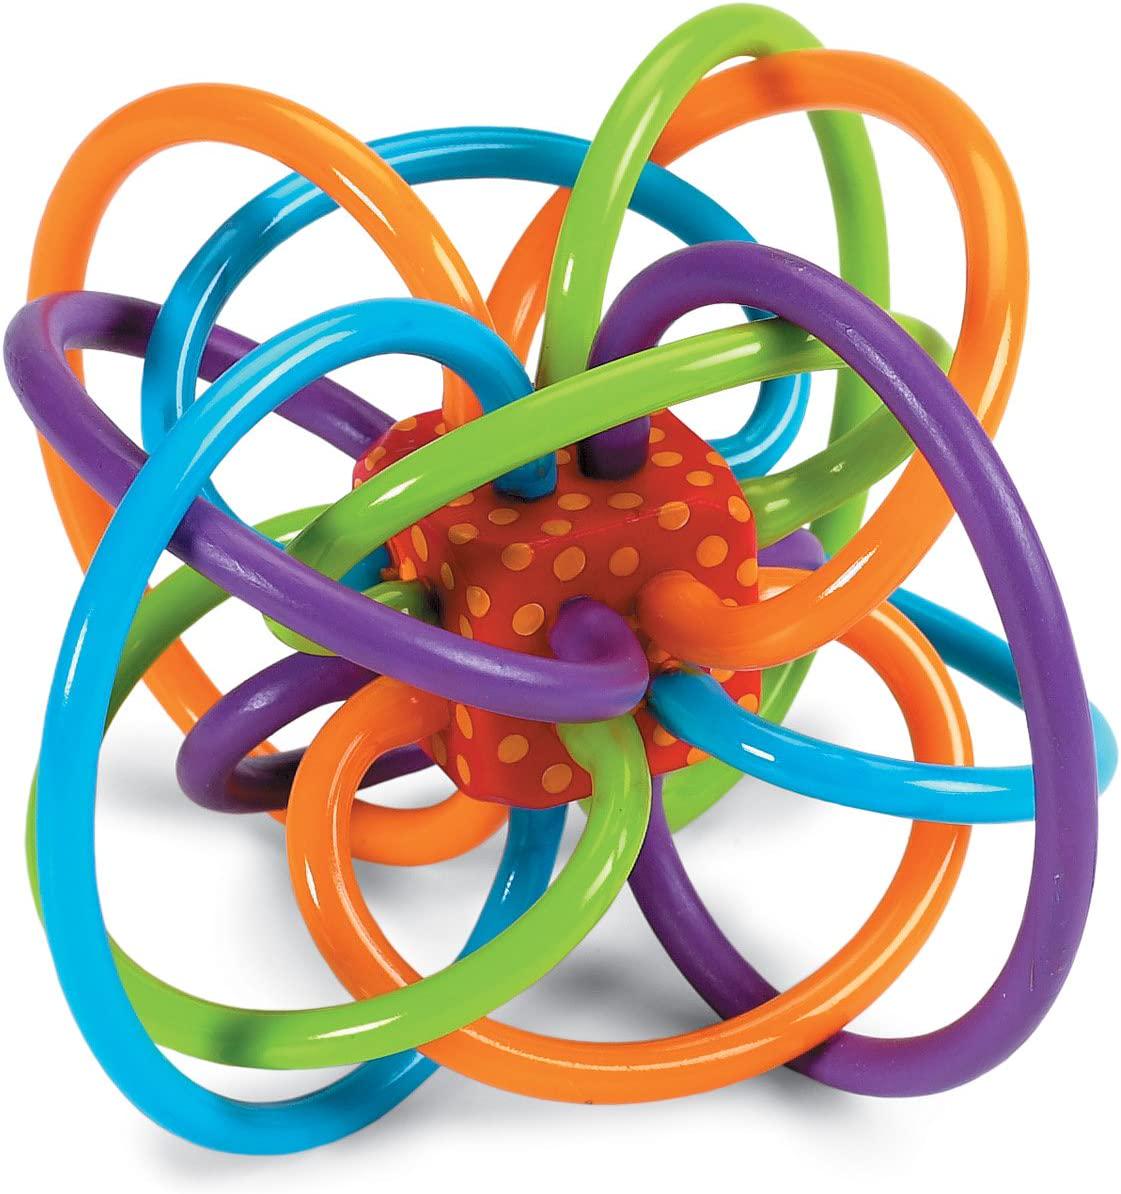 Manhattan Toy Winkel Rattle and Sensory Teether Toy, Blue/Green/Orange, 5 Inch x 4 Inch x 3.5 Inch-